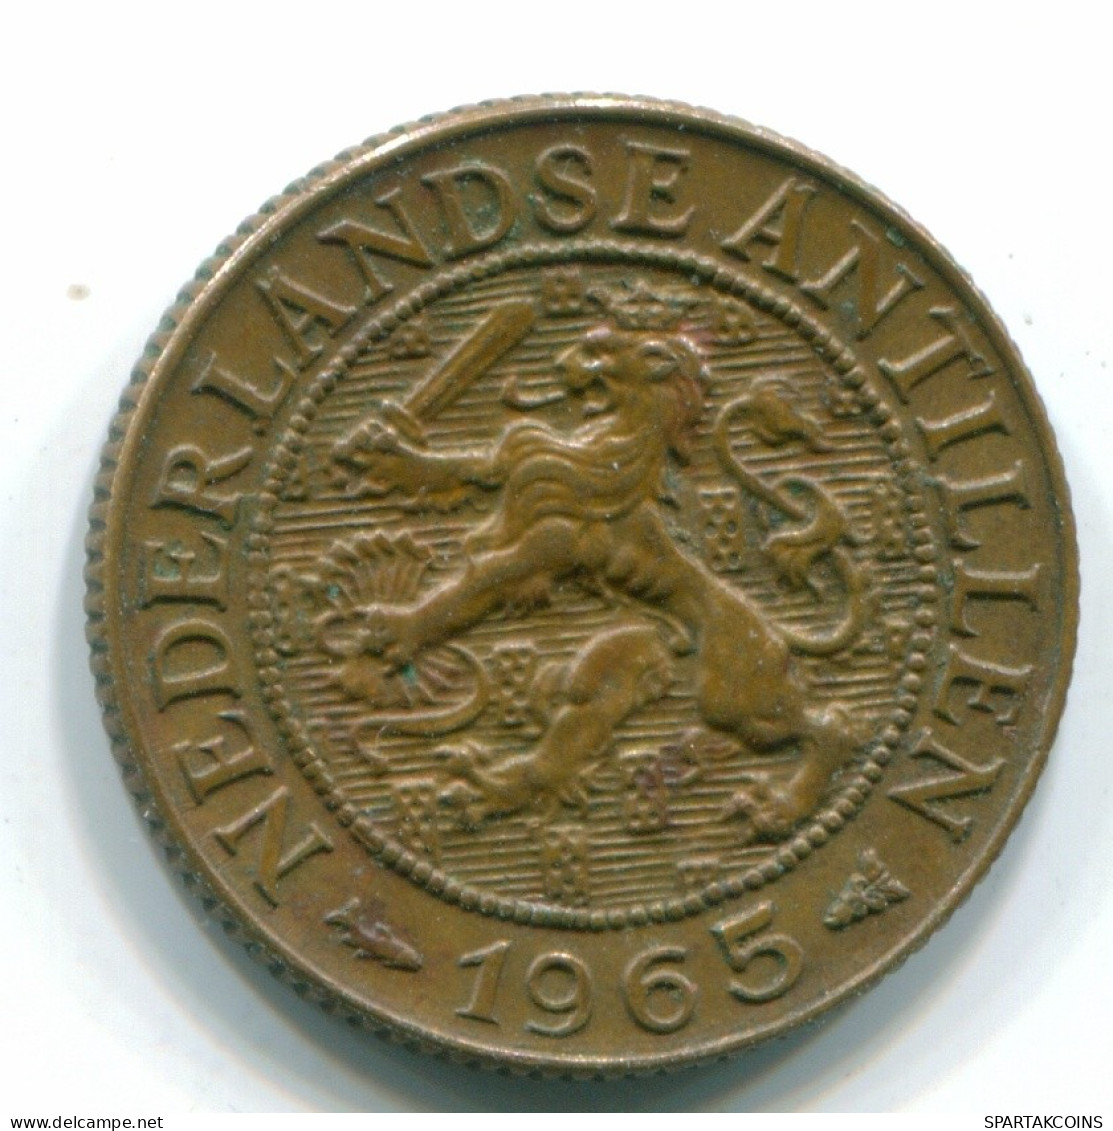 1 CENT 1965 NIEDERLÄNDISCHE ANTILLEN Bronze Fish Koloniale Münze #S11122.D.A - Antilles Néerlandaises